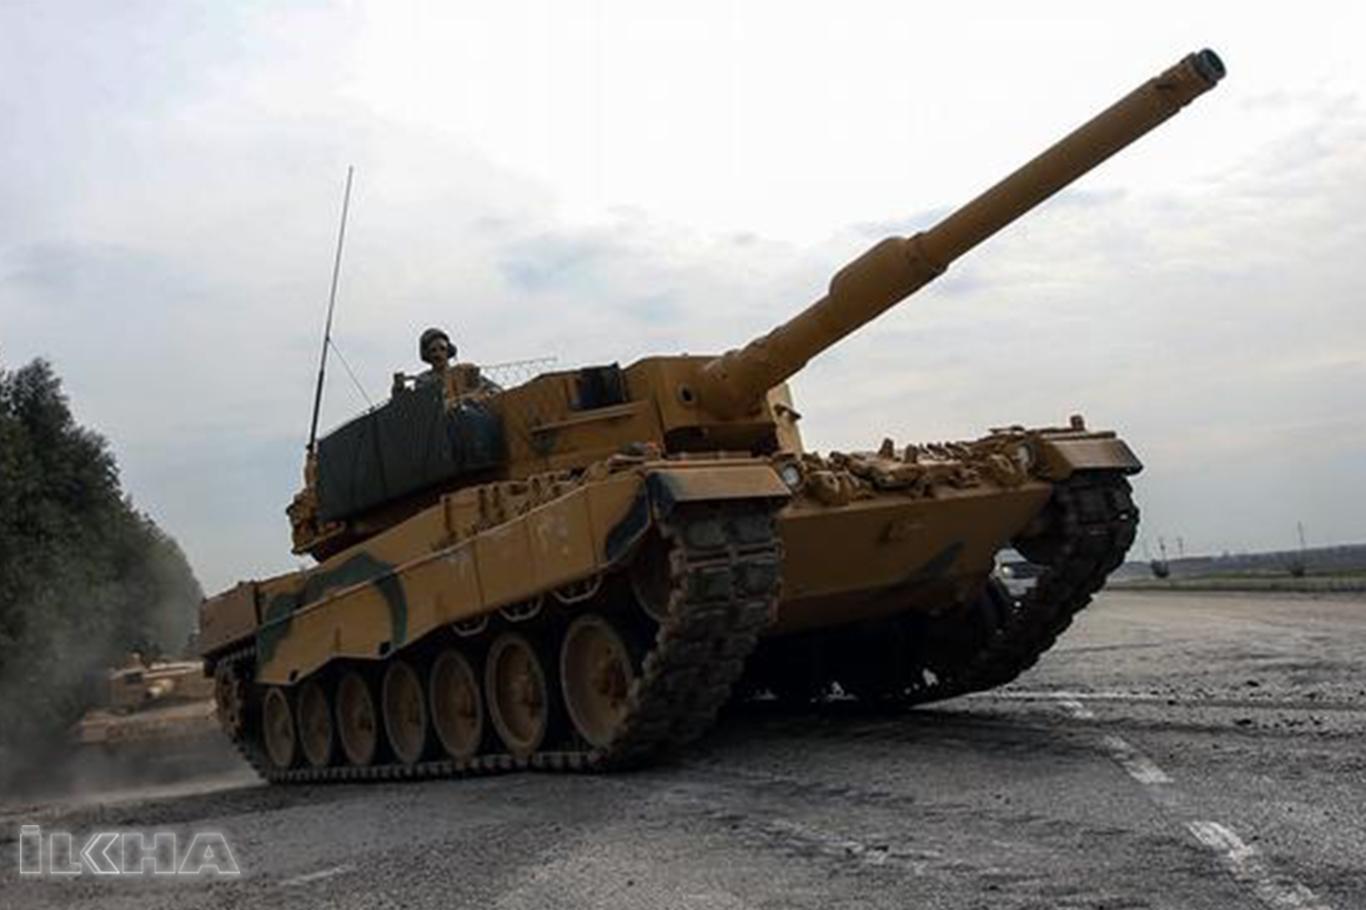 Germany suspends the modernization of tanks in Turkiye